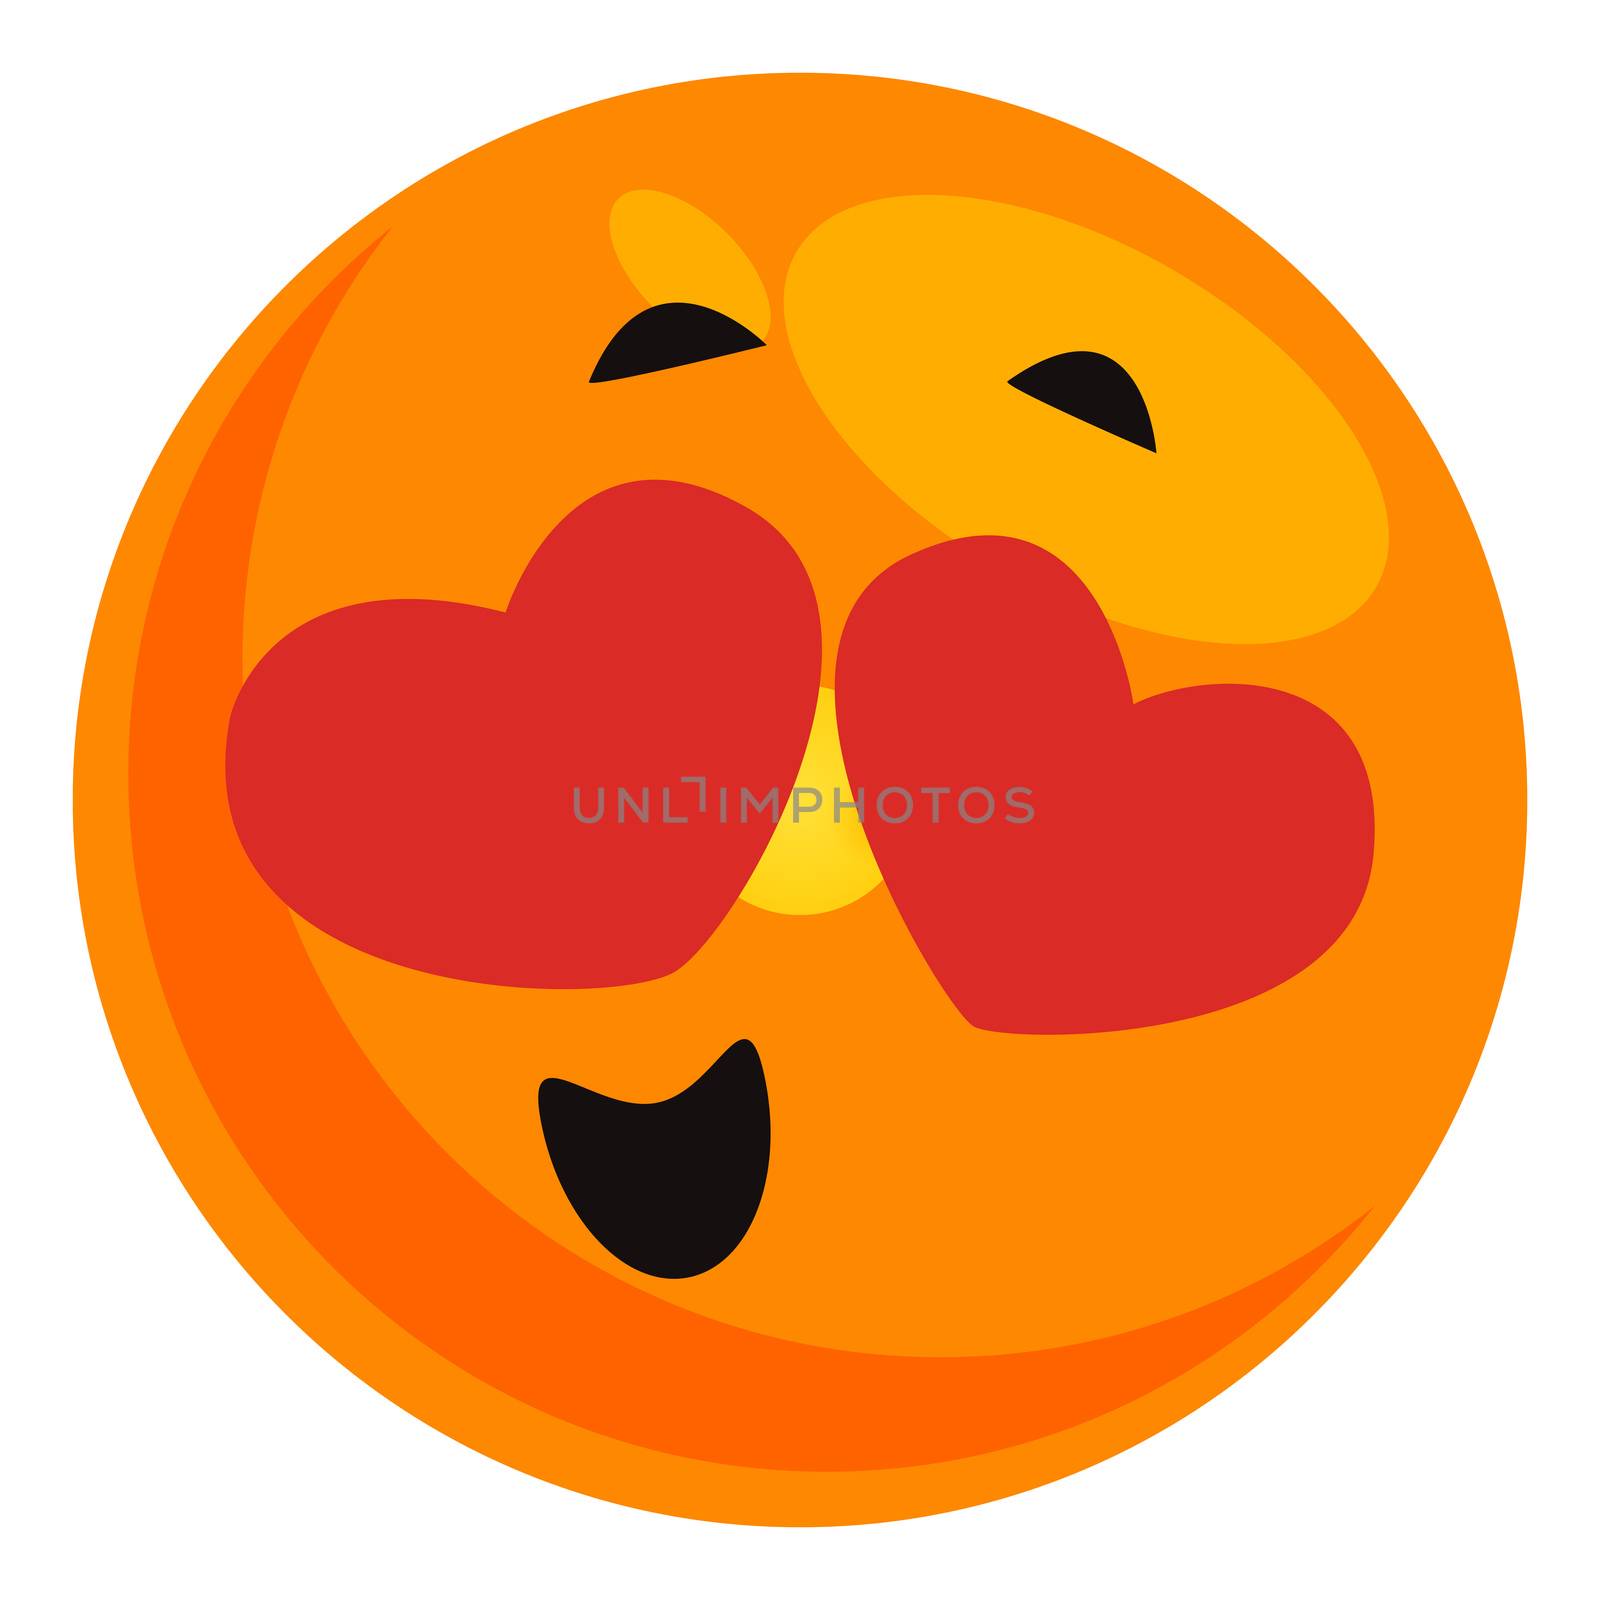 Emoji in love, illustration, vector on white background